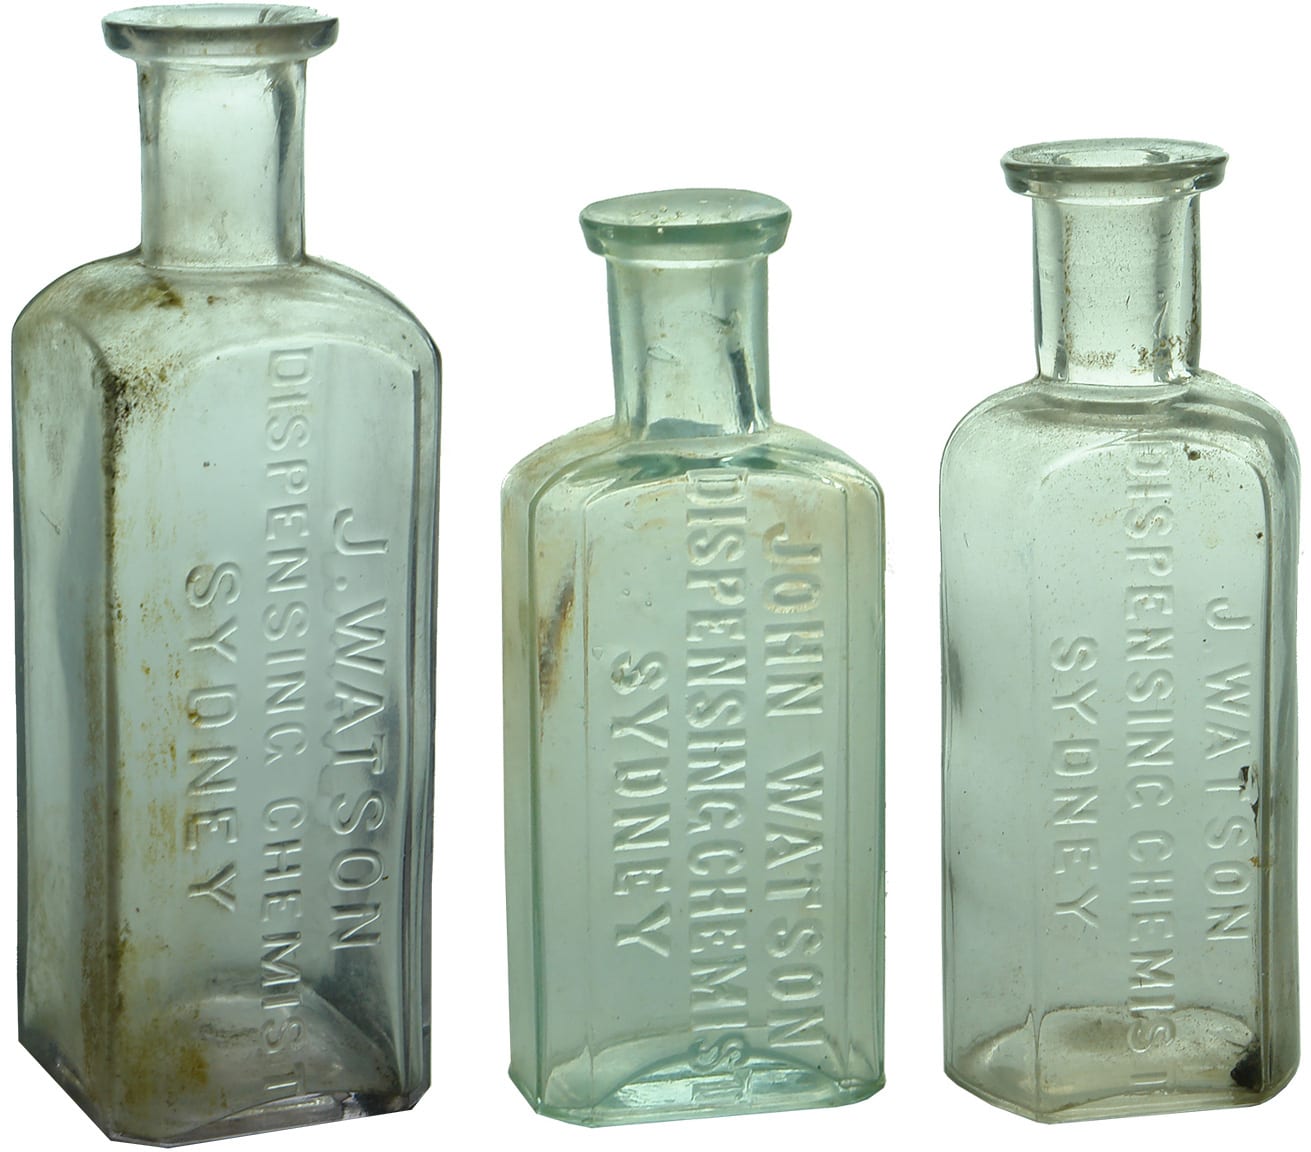 Watson Chemist Sydney Antique Bottles